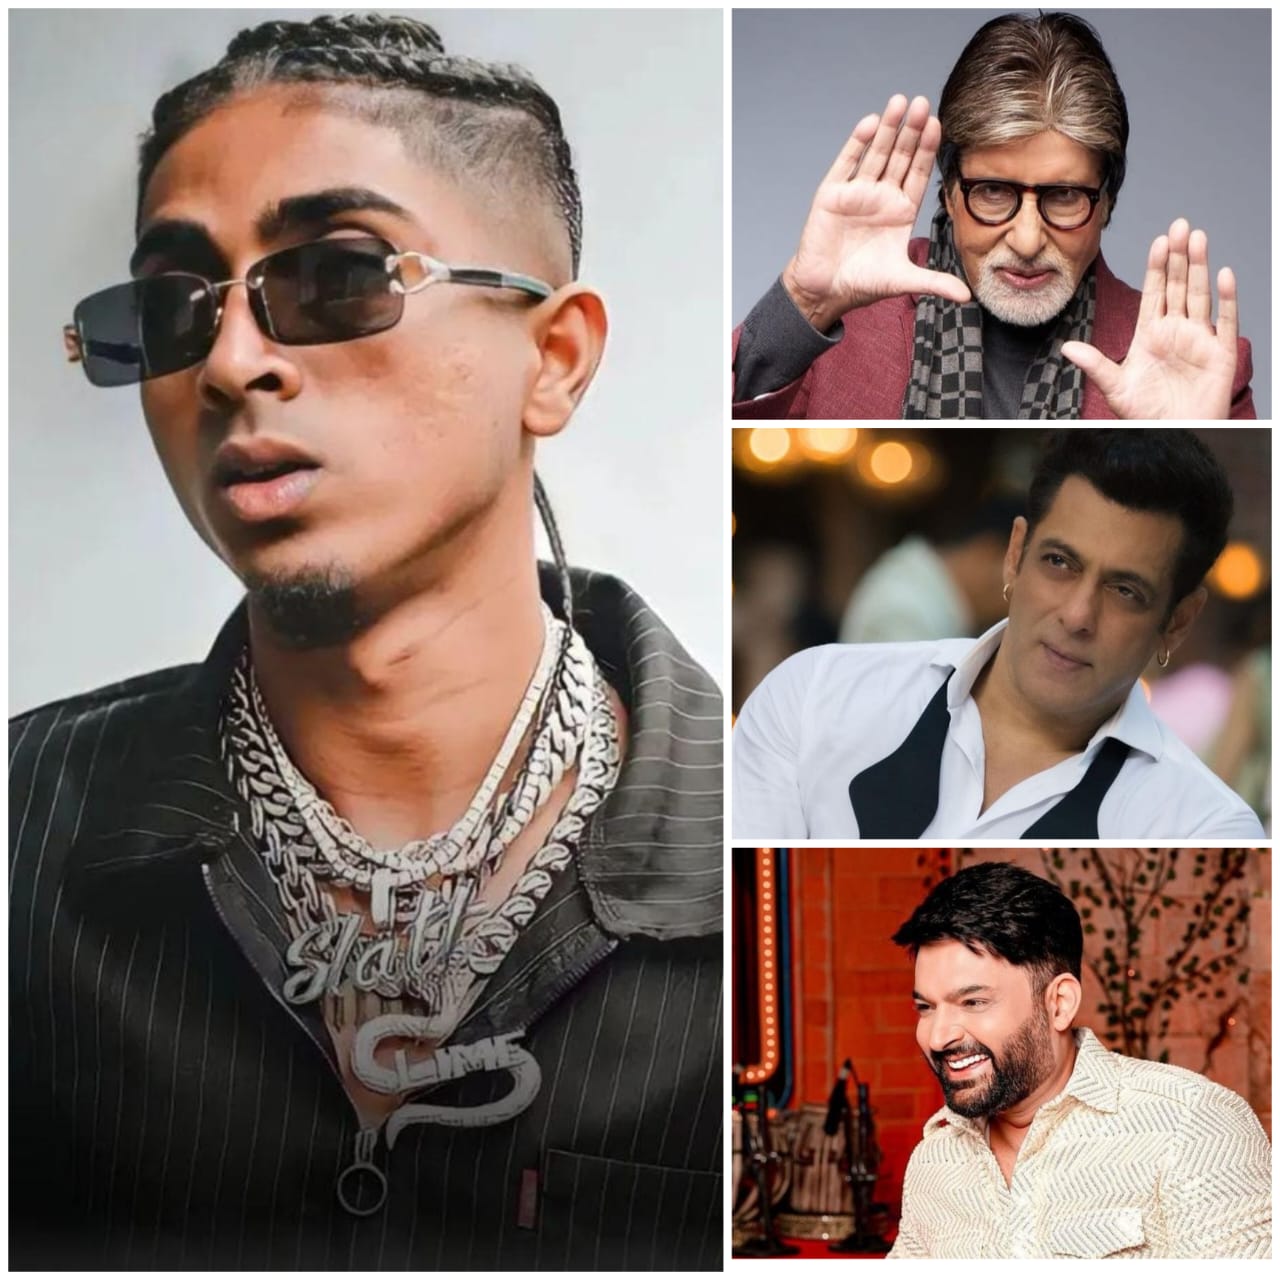 MC Stan enters the top 5 most popular non-fiction personalities list with Amitabh Bachchan, Salman Khan, and Kapil Sharma